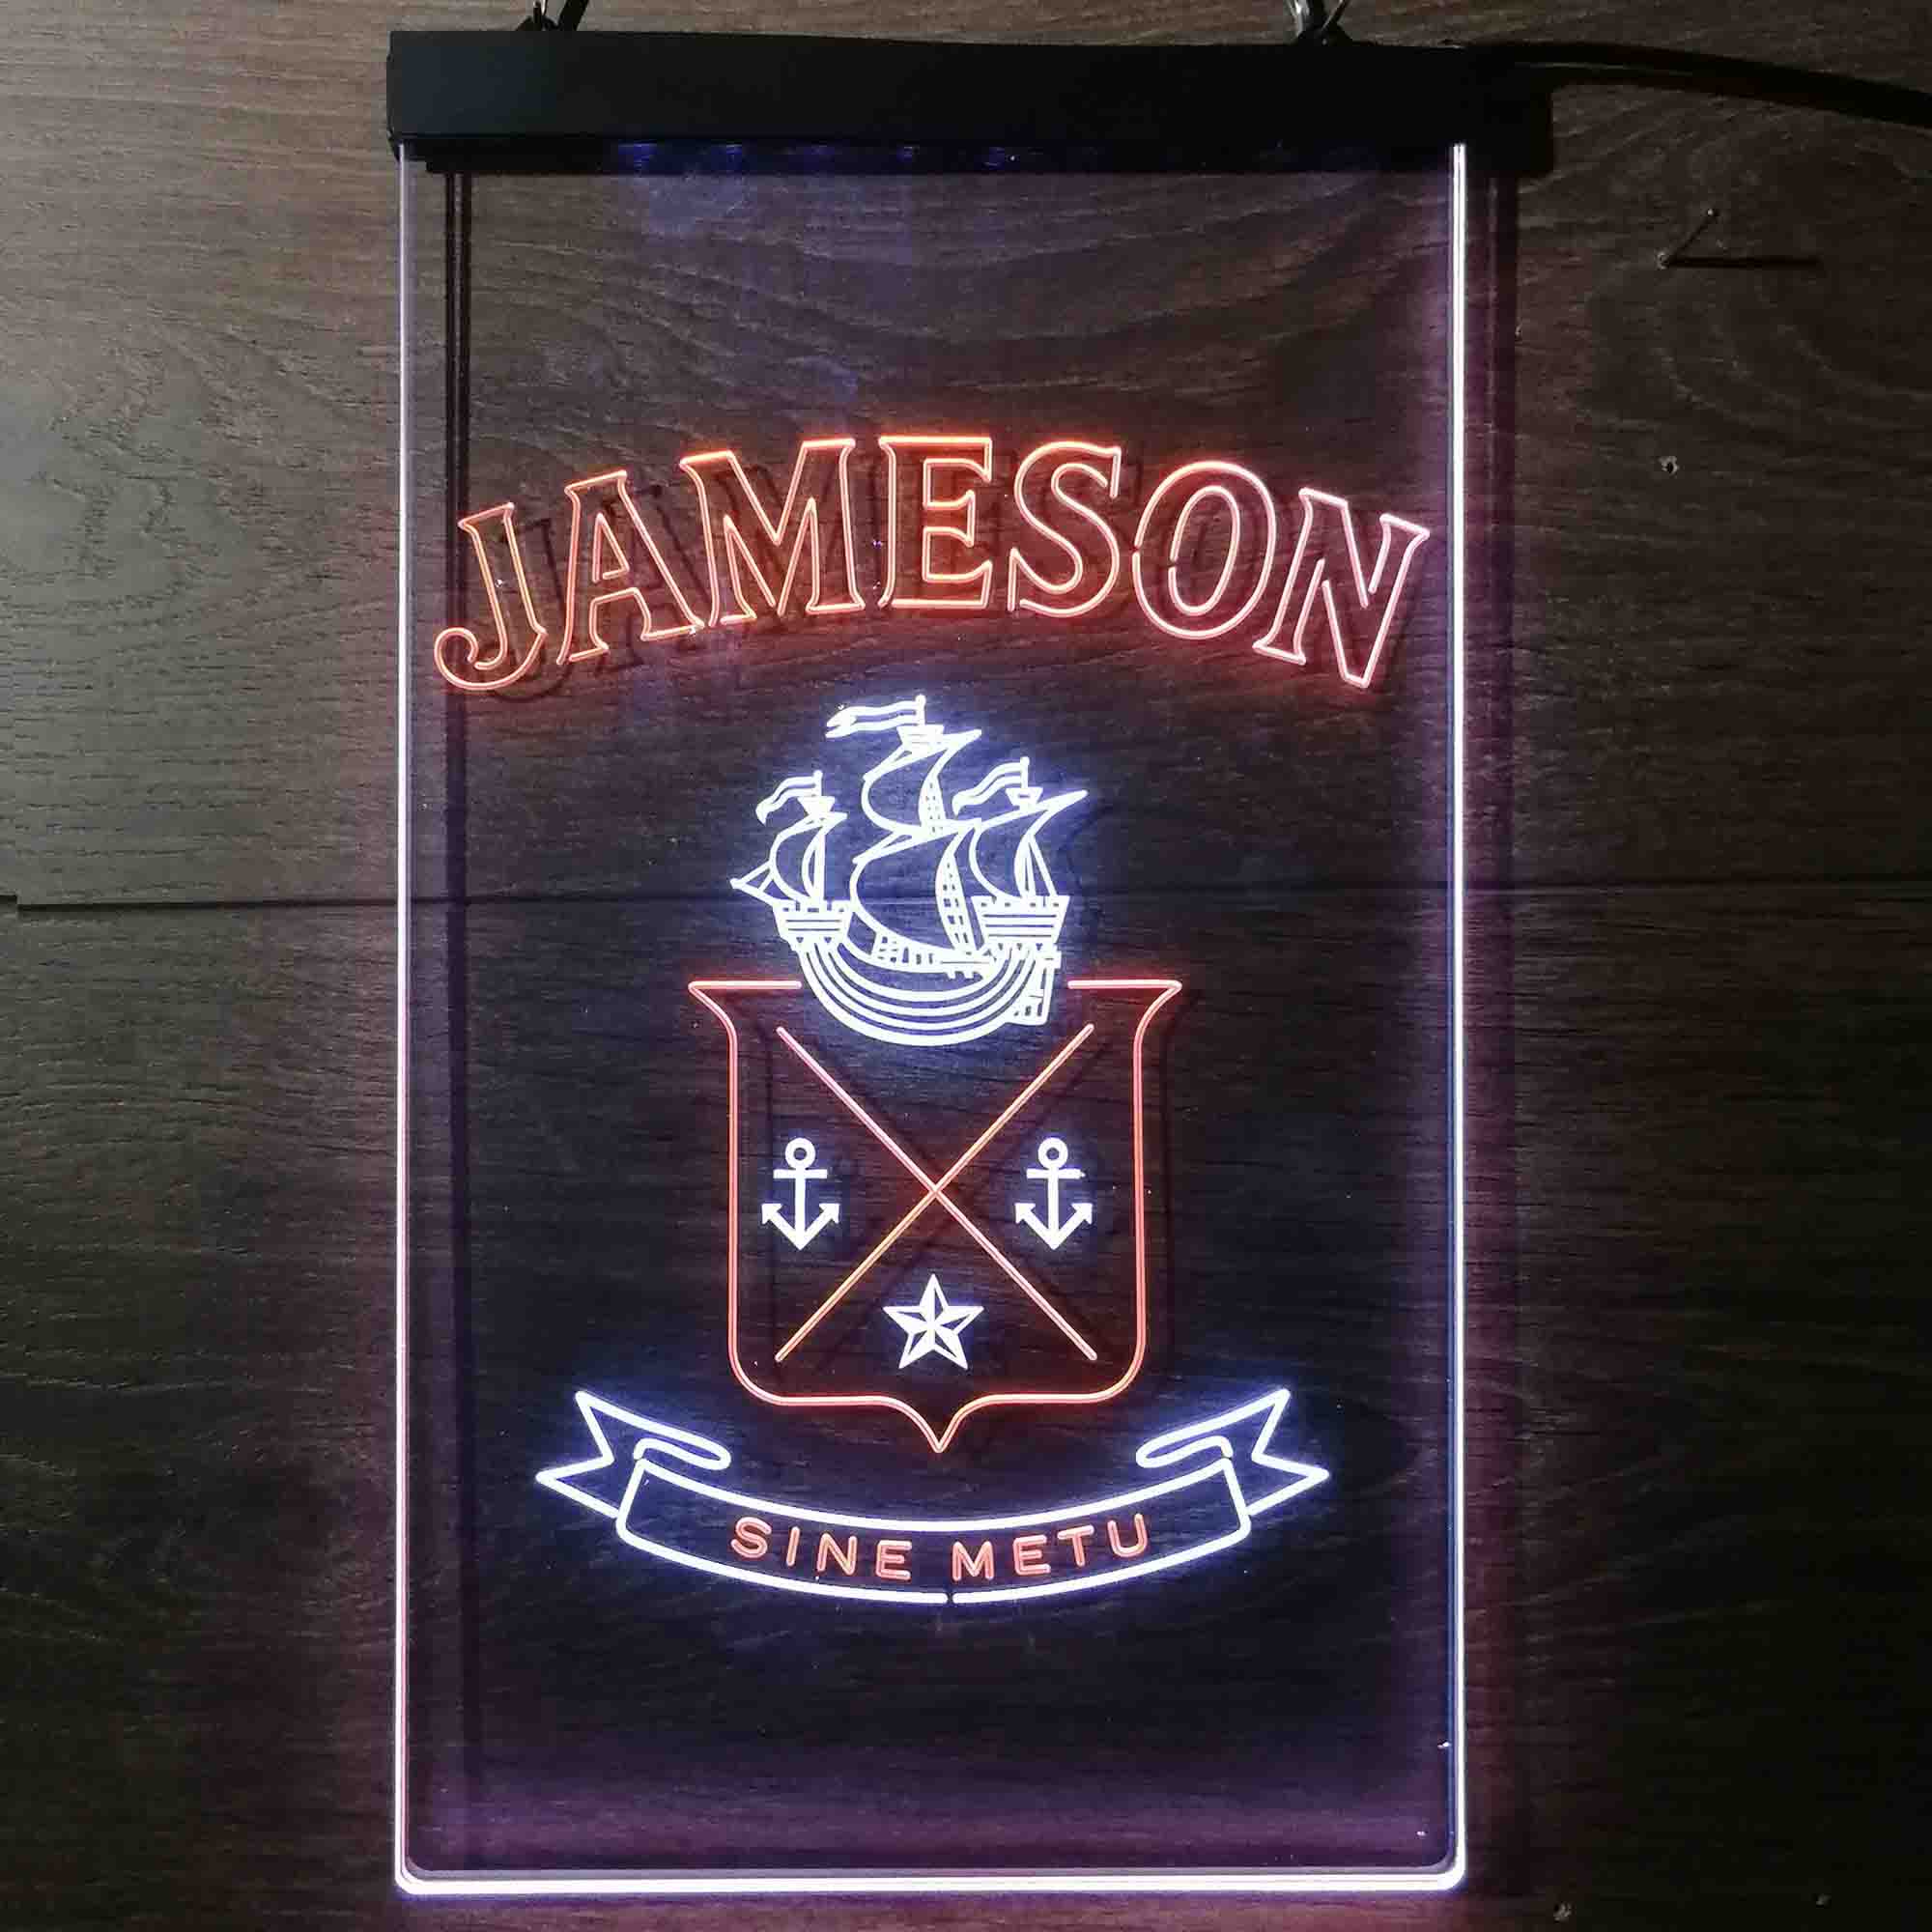 Jameson Sine Metu Dual Color LED Neon Sign ProLedSign